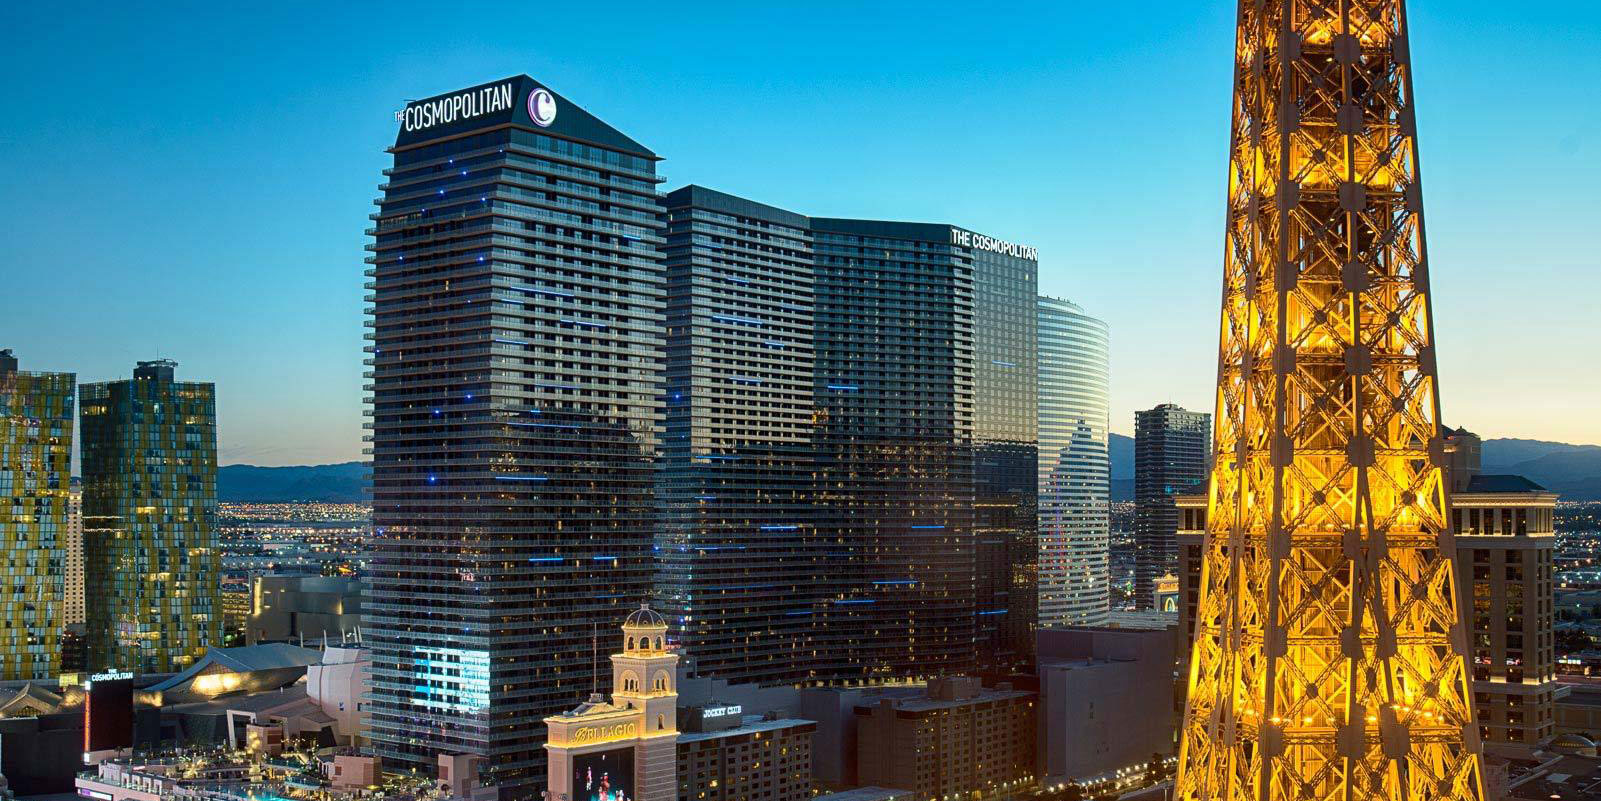 Las Vegas Cosmopolitan hotel